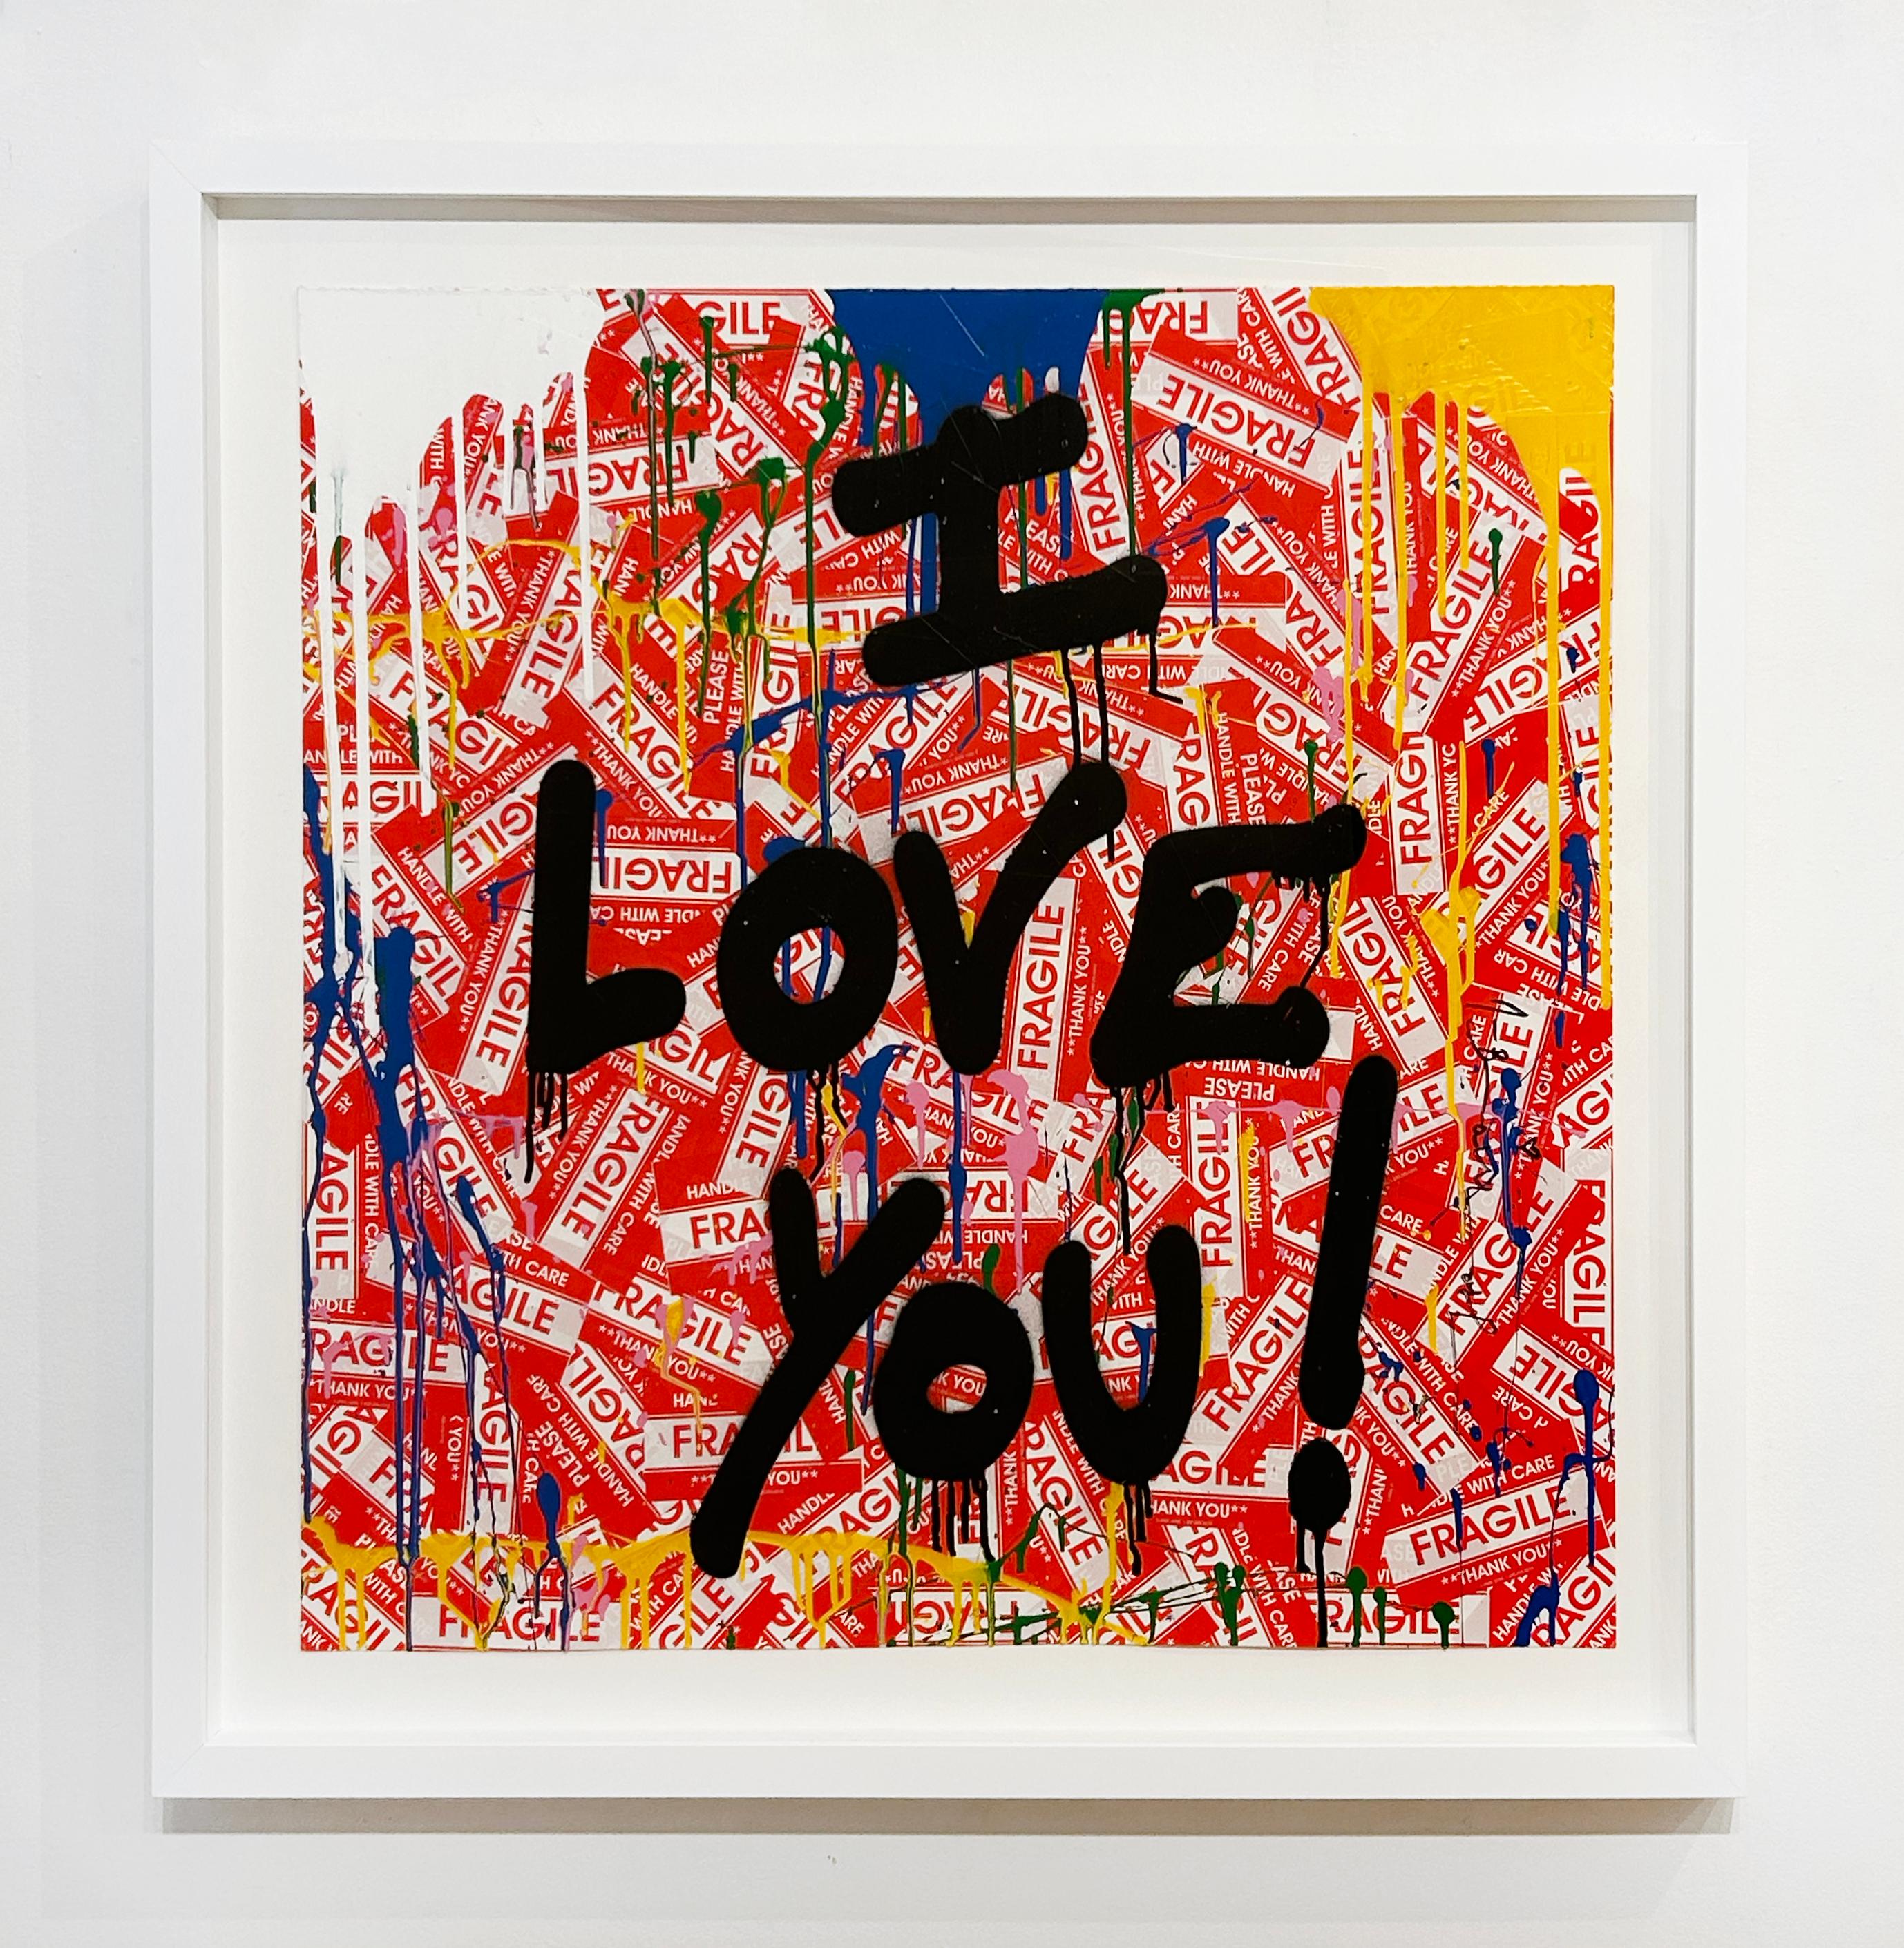 I Love You (Je t'aime) - Art urbain Mixed Media Art par Mr. Brainwash